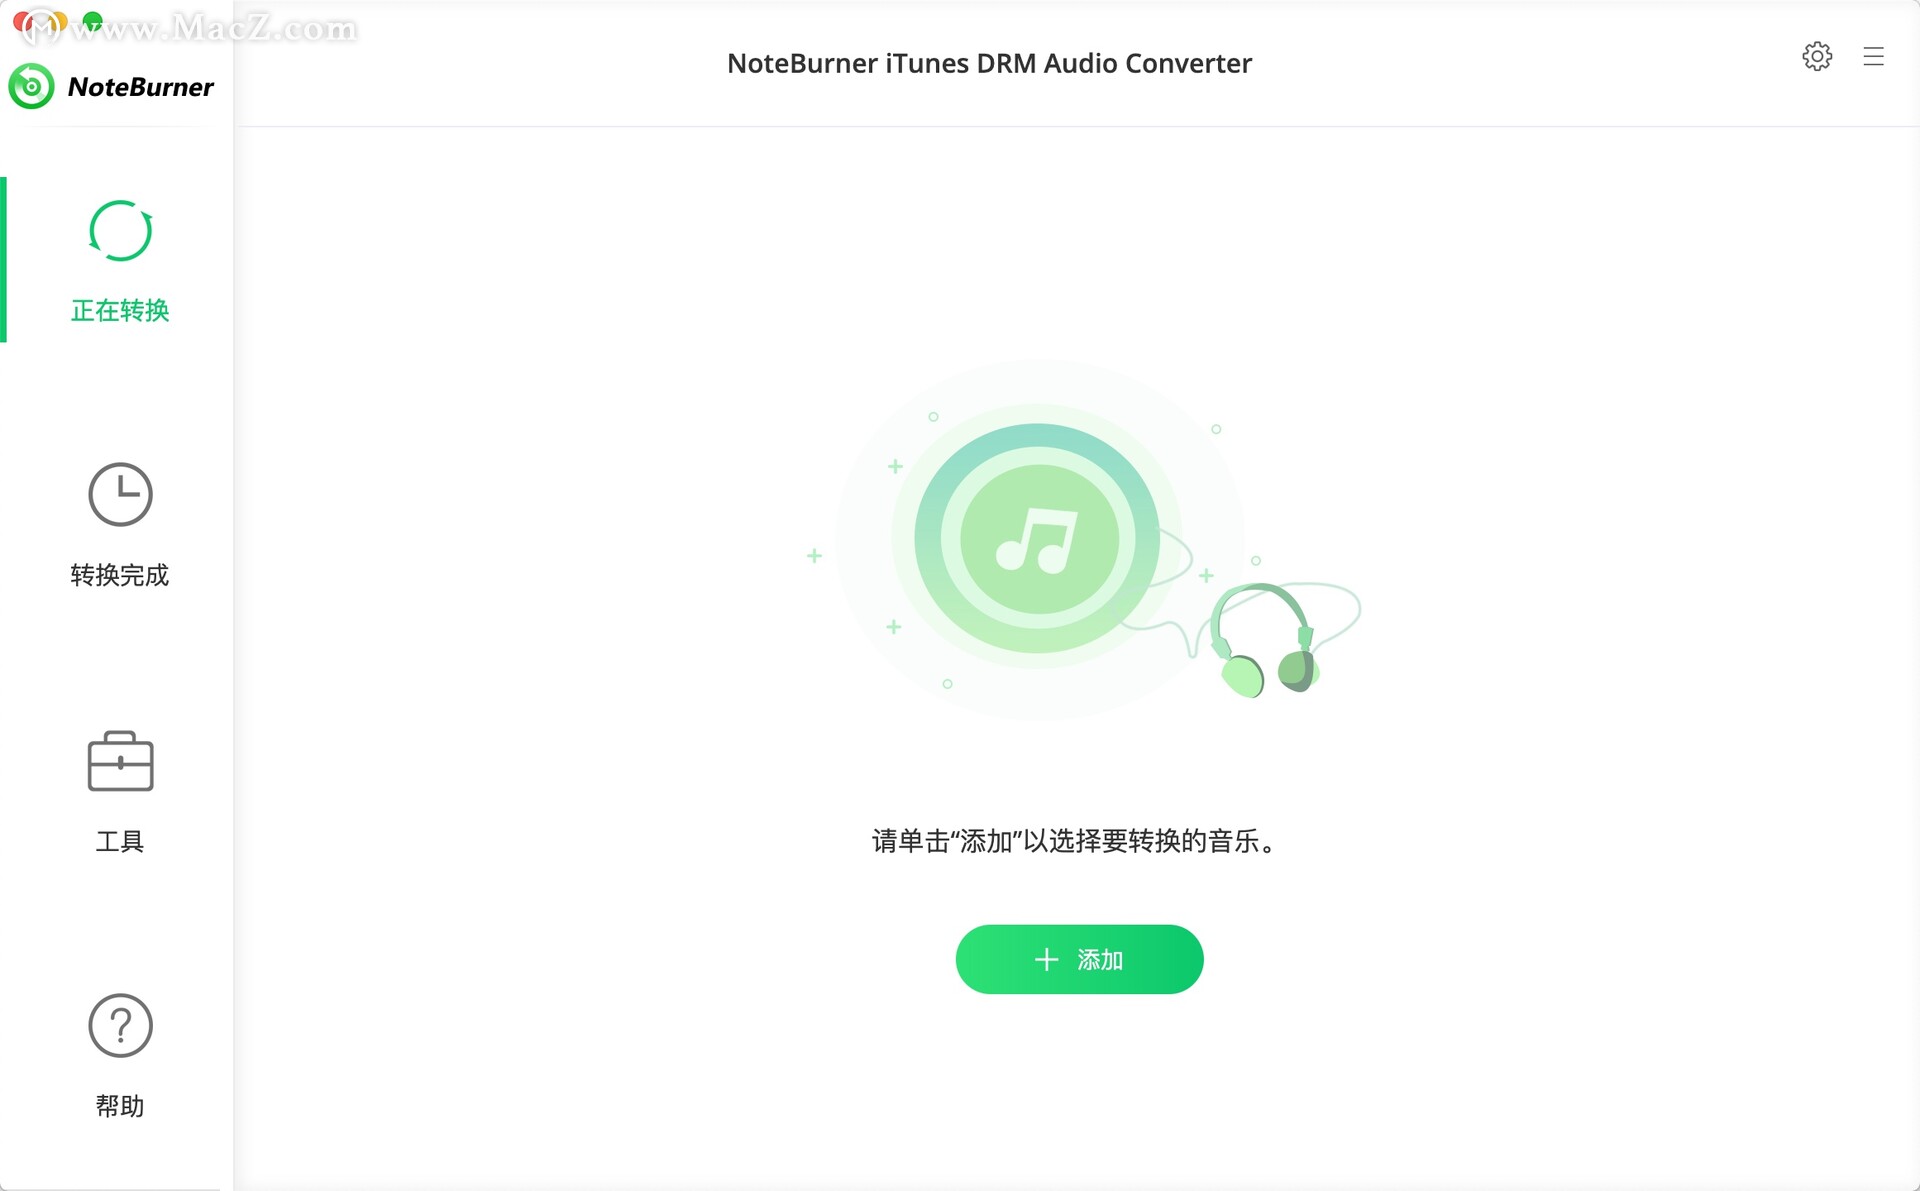 NoteBurner Mac音频转换器下载-NoteBurner iTunes DRM Audio Converter for Mac(DRM音频转换器) – Mac下载插图7